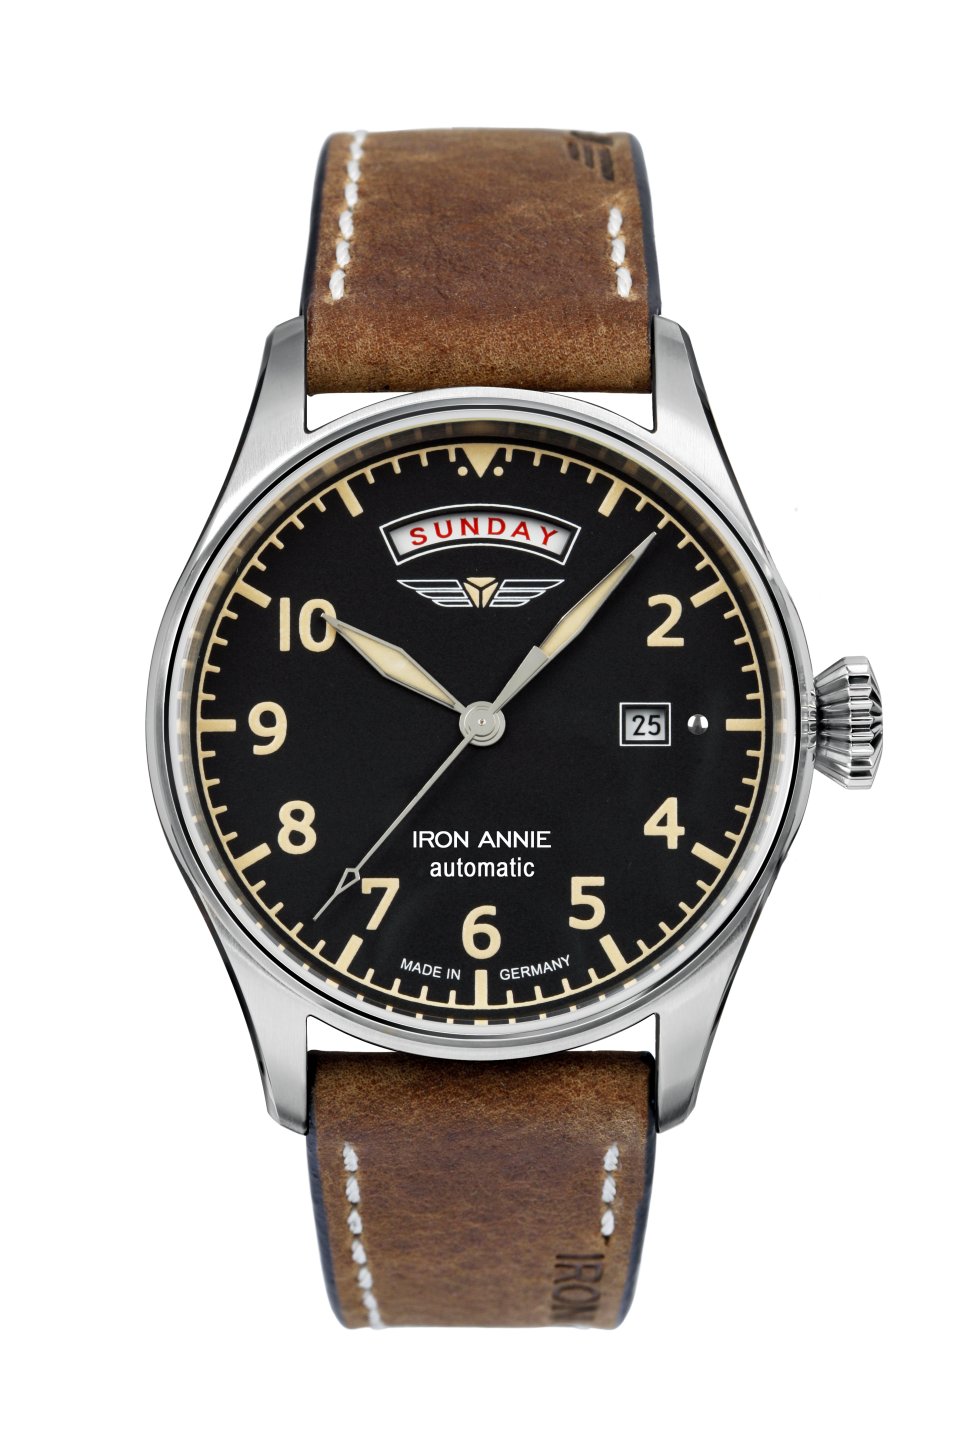 HAU, CT-Iron Annie Automatic 5atm Germany | 8285 | wr Flight Control ANNIE 8285 Made IRON Uhren in Edelstahl | Herren 21 Jewels, Cal. 